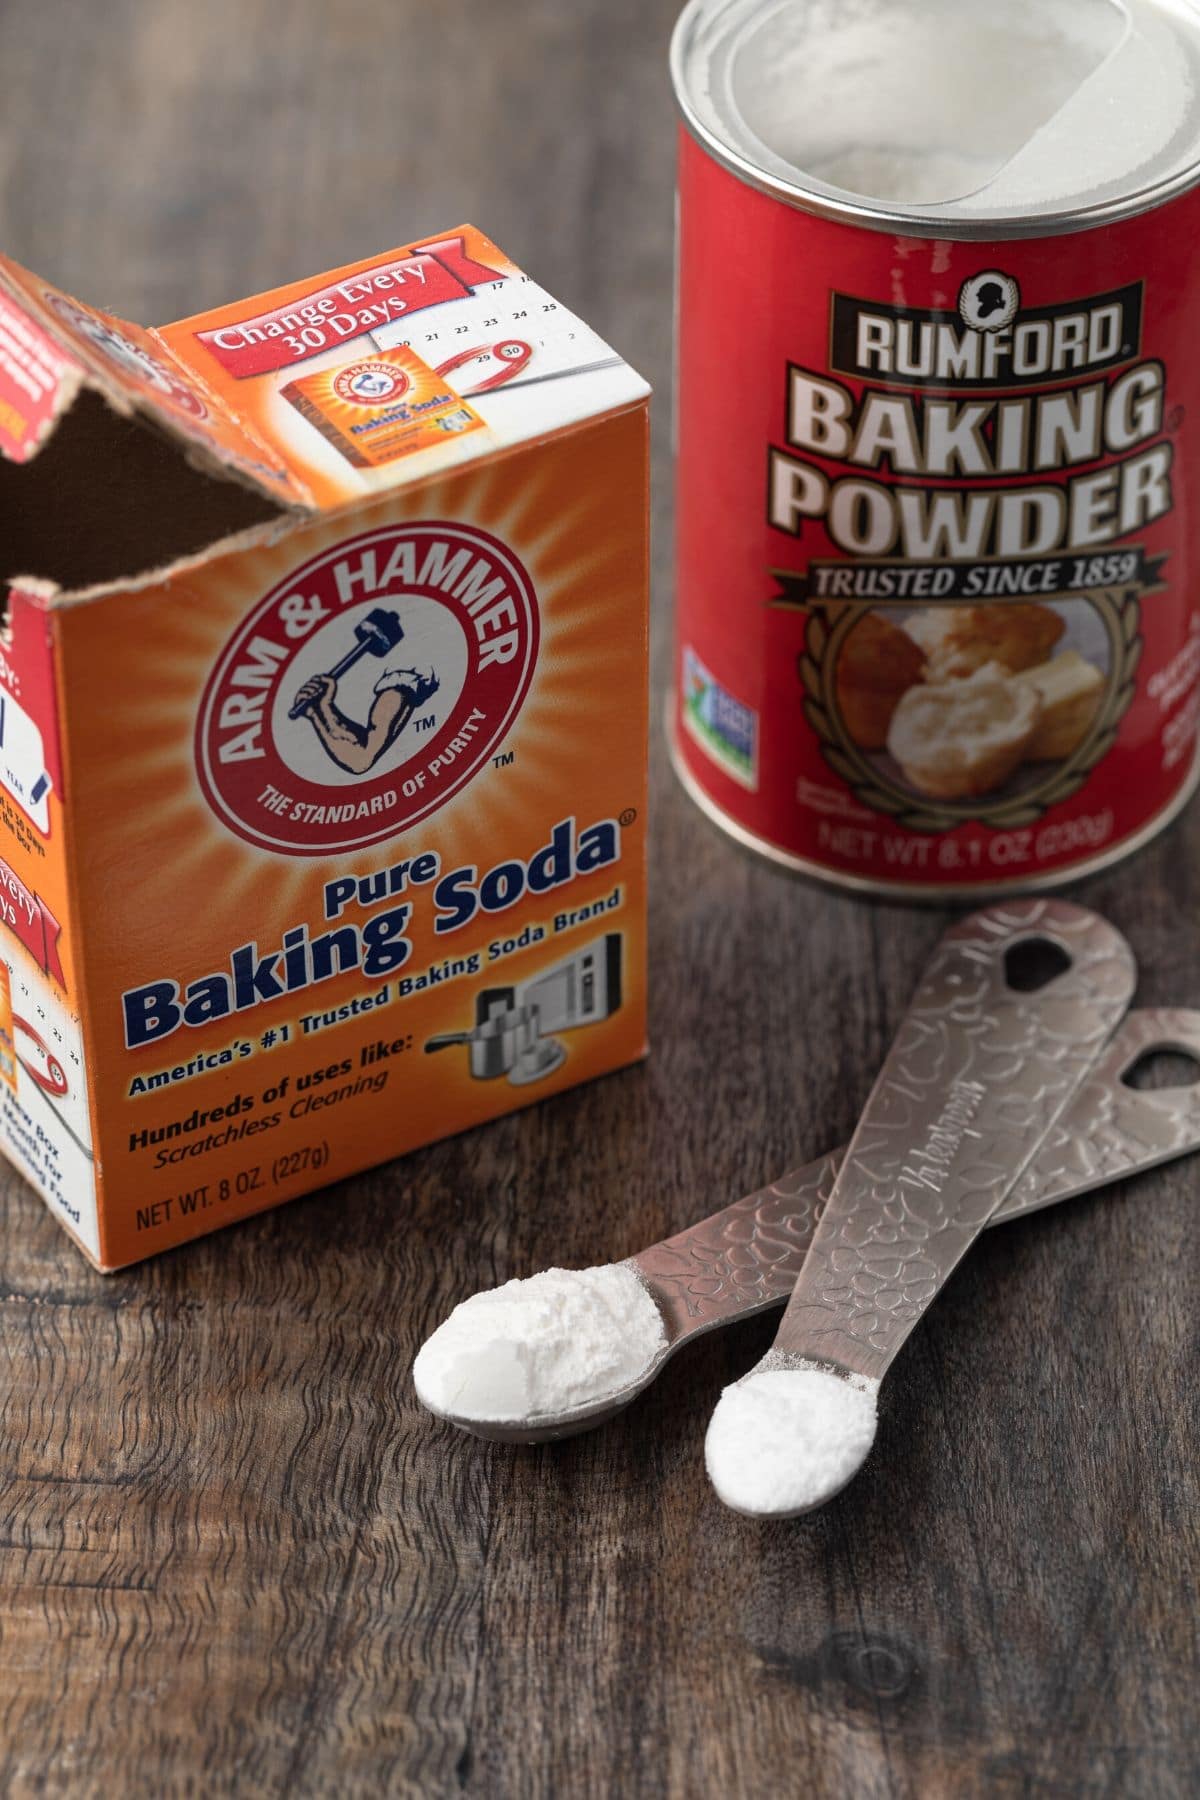 baking powder and baking soda with teaspoons